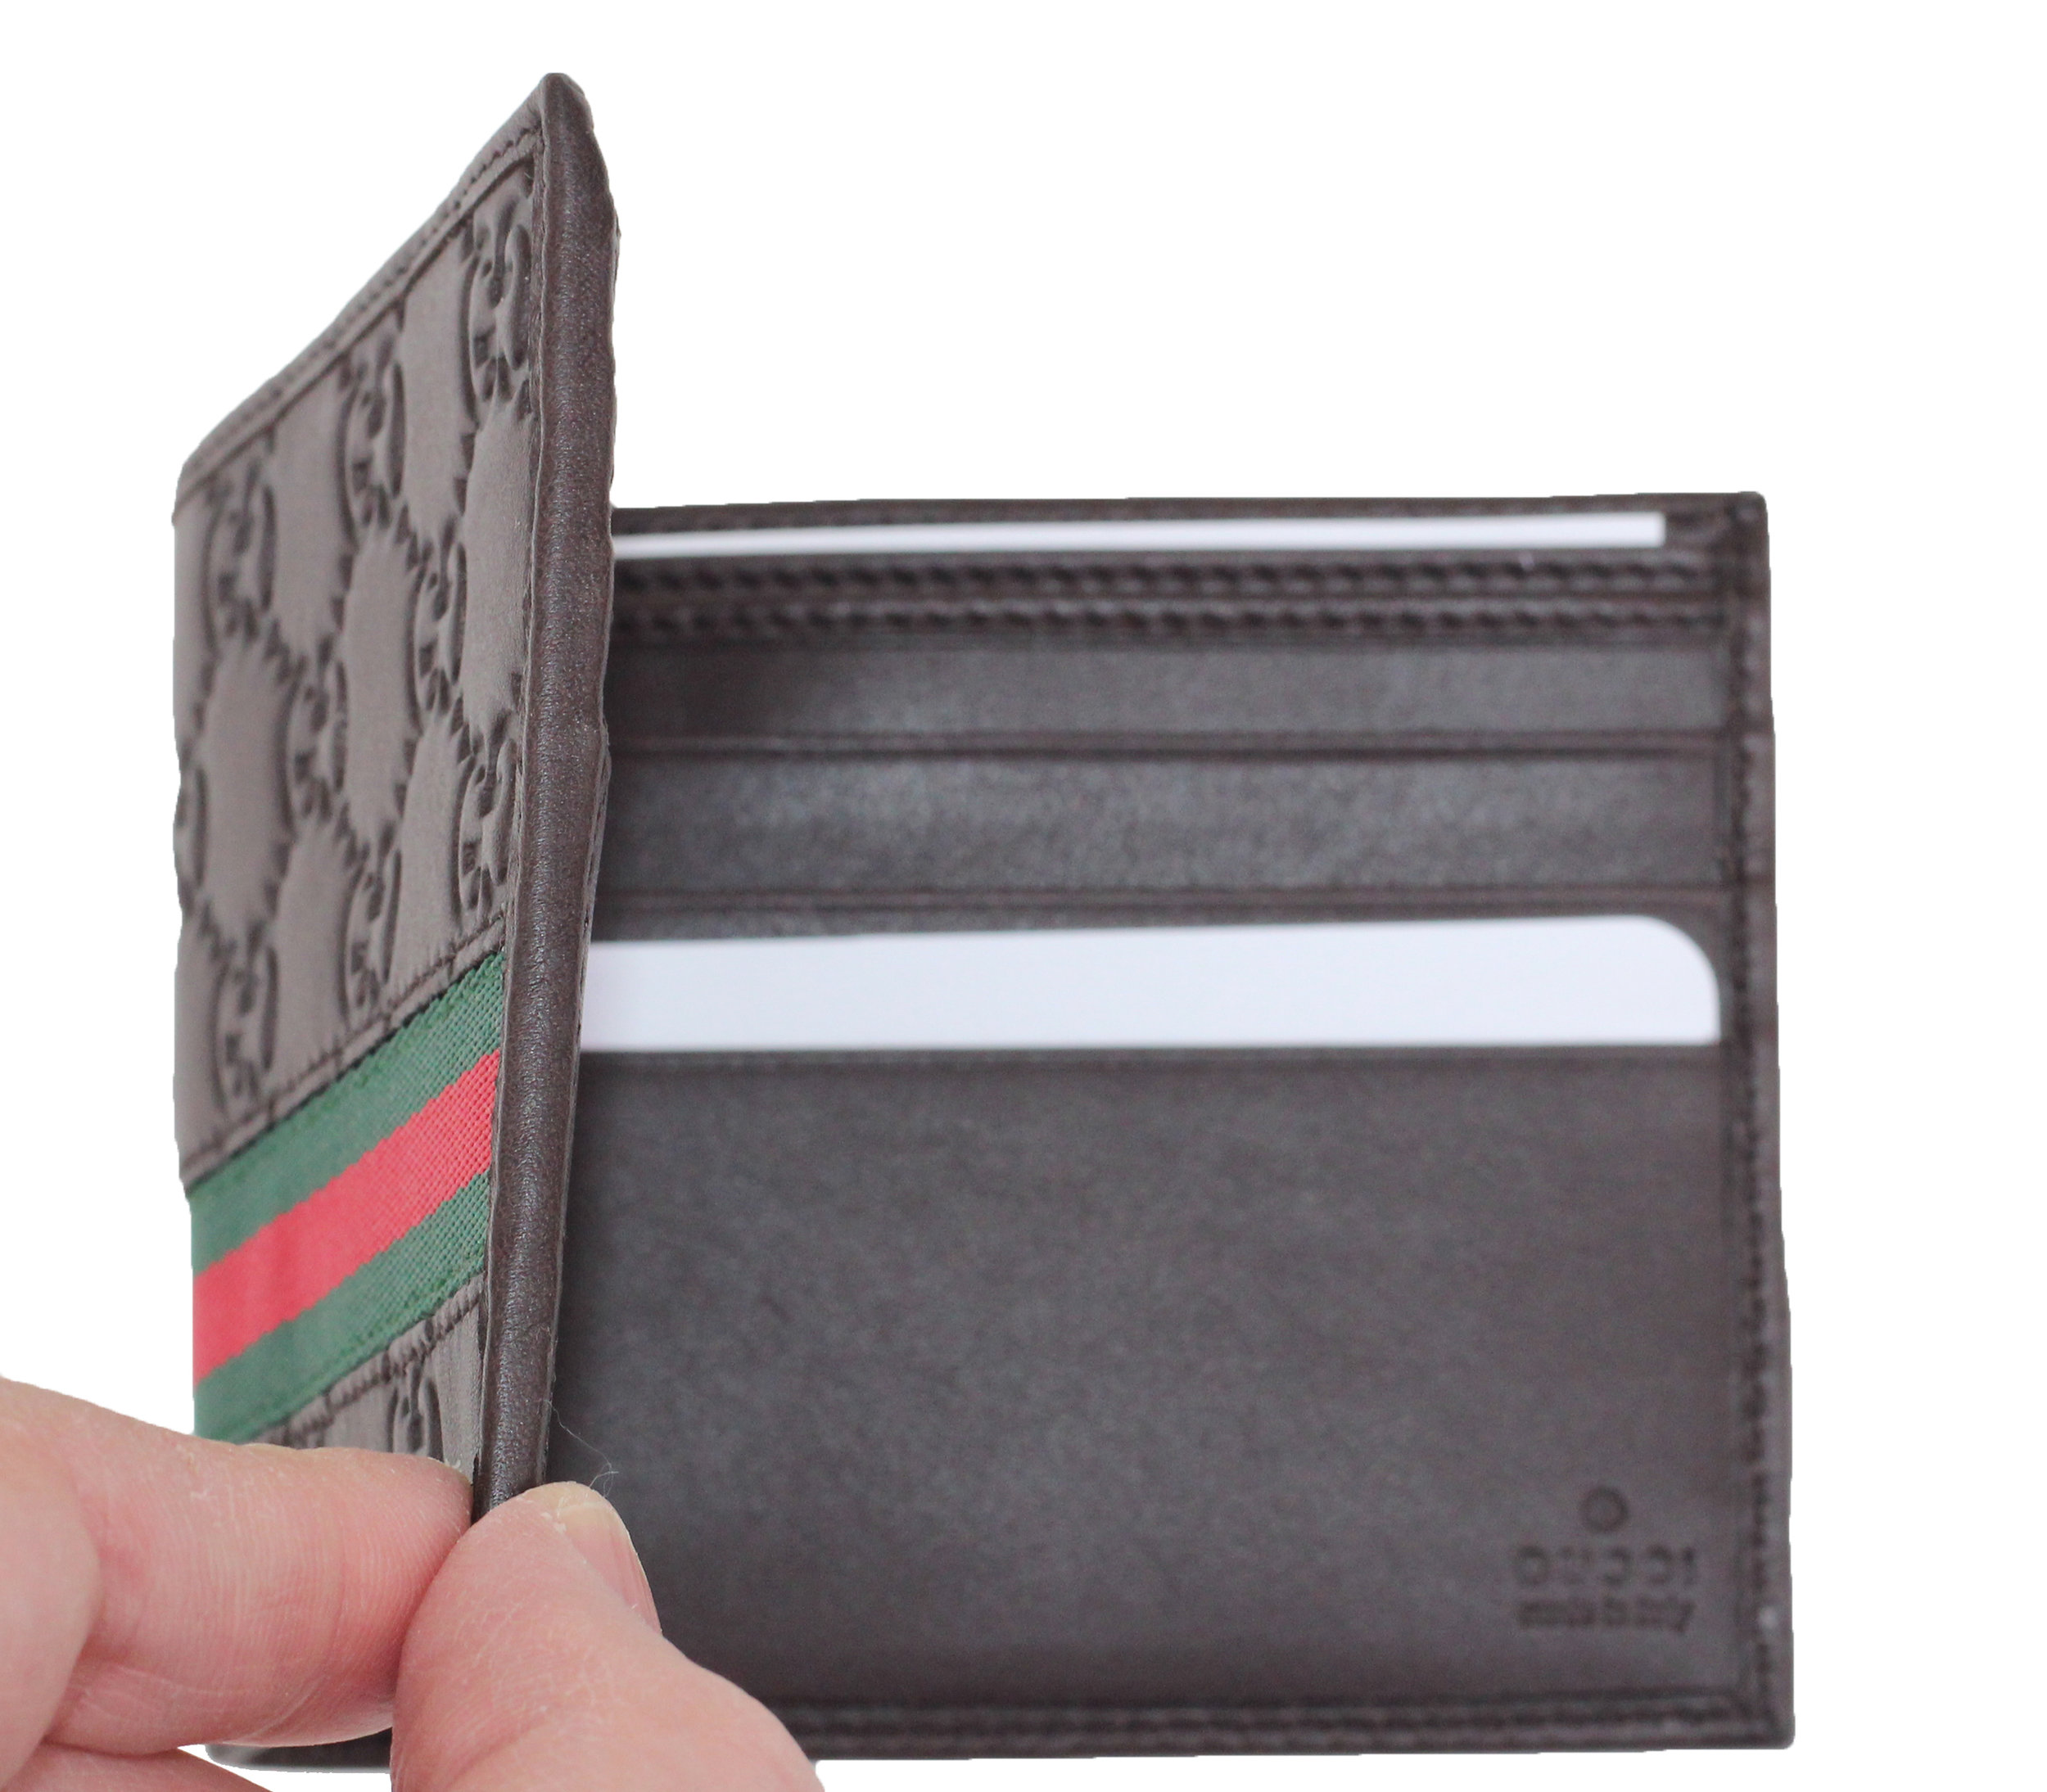 inside of gucci wallet